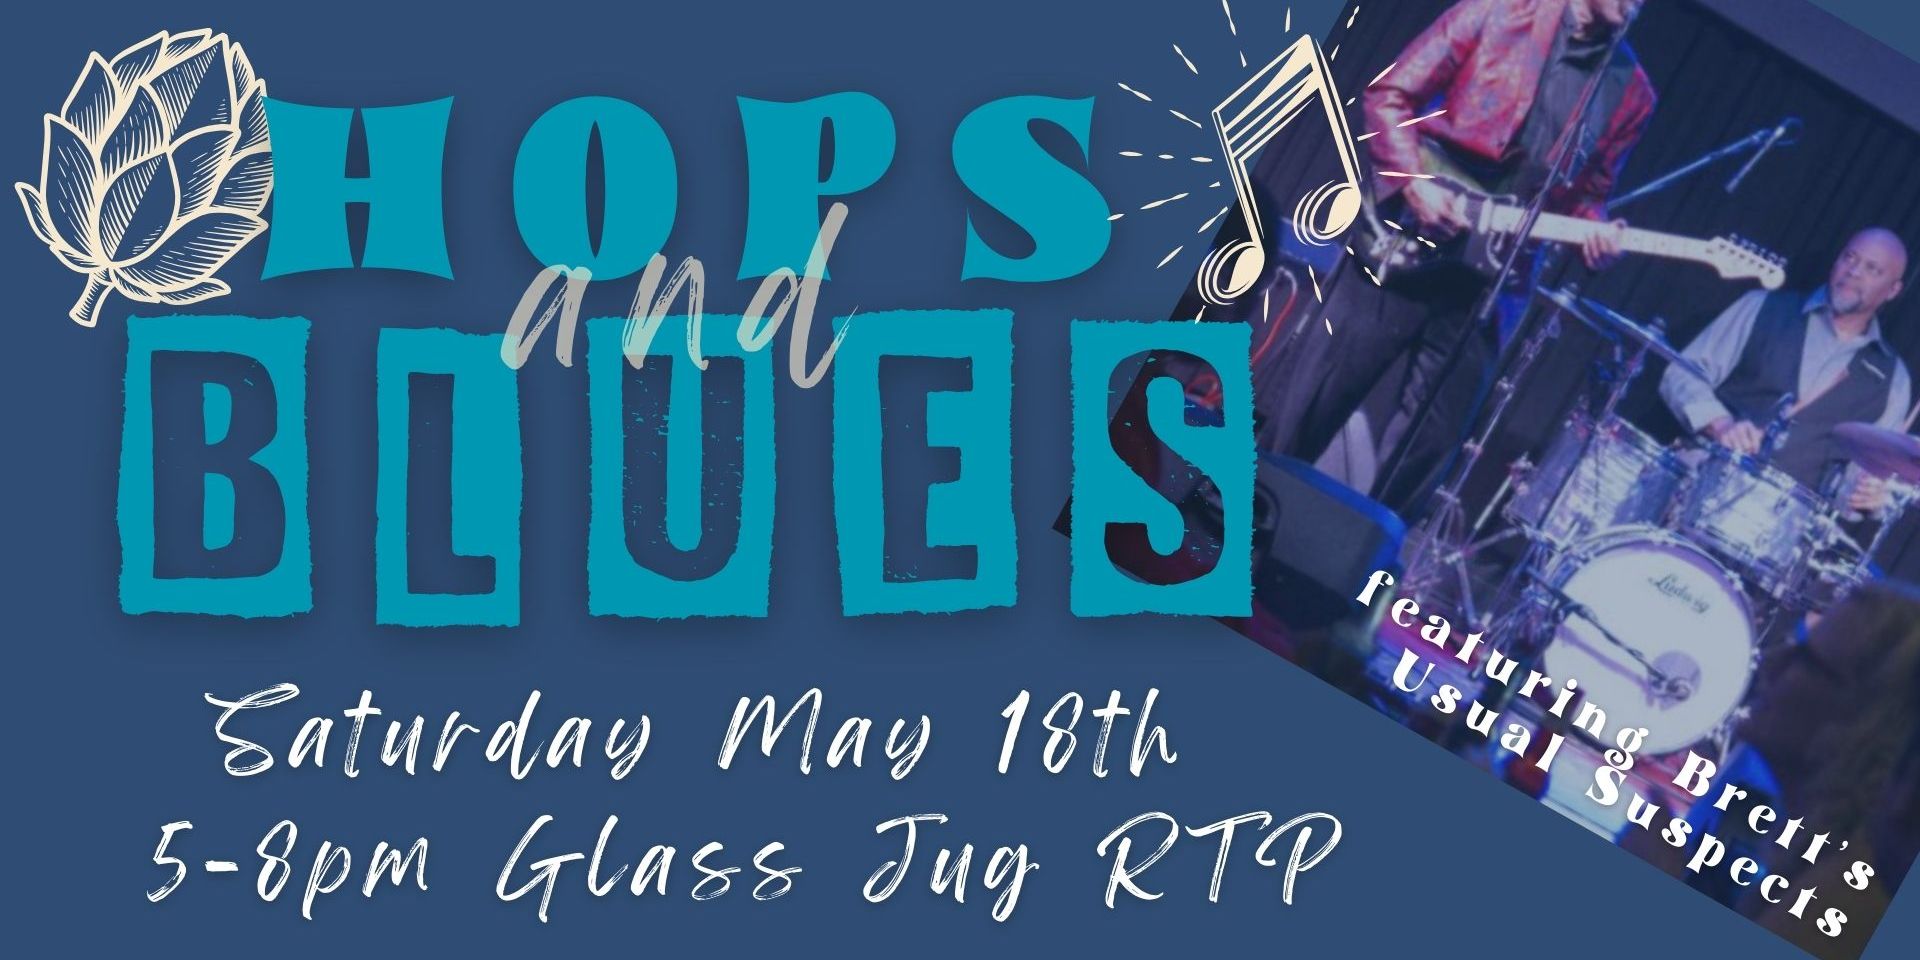 Hops & Blues promotional image